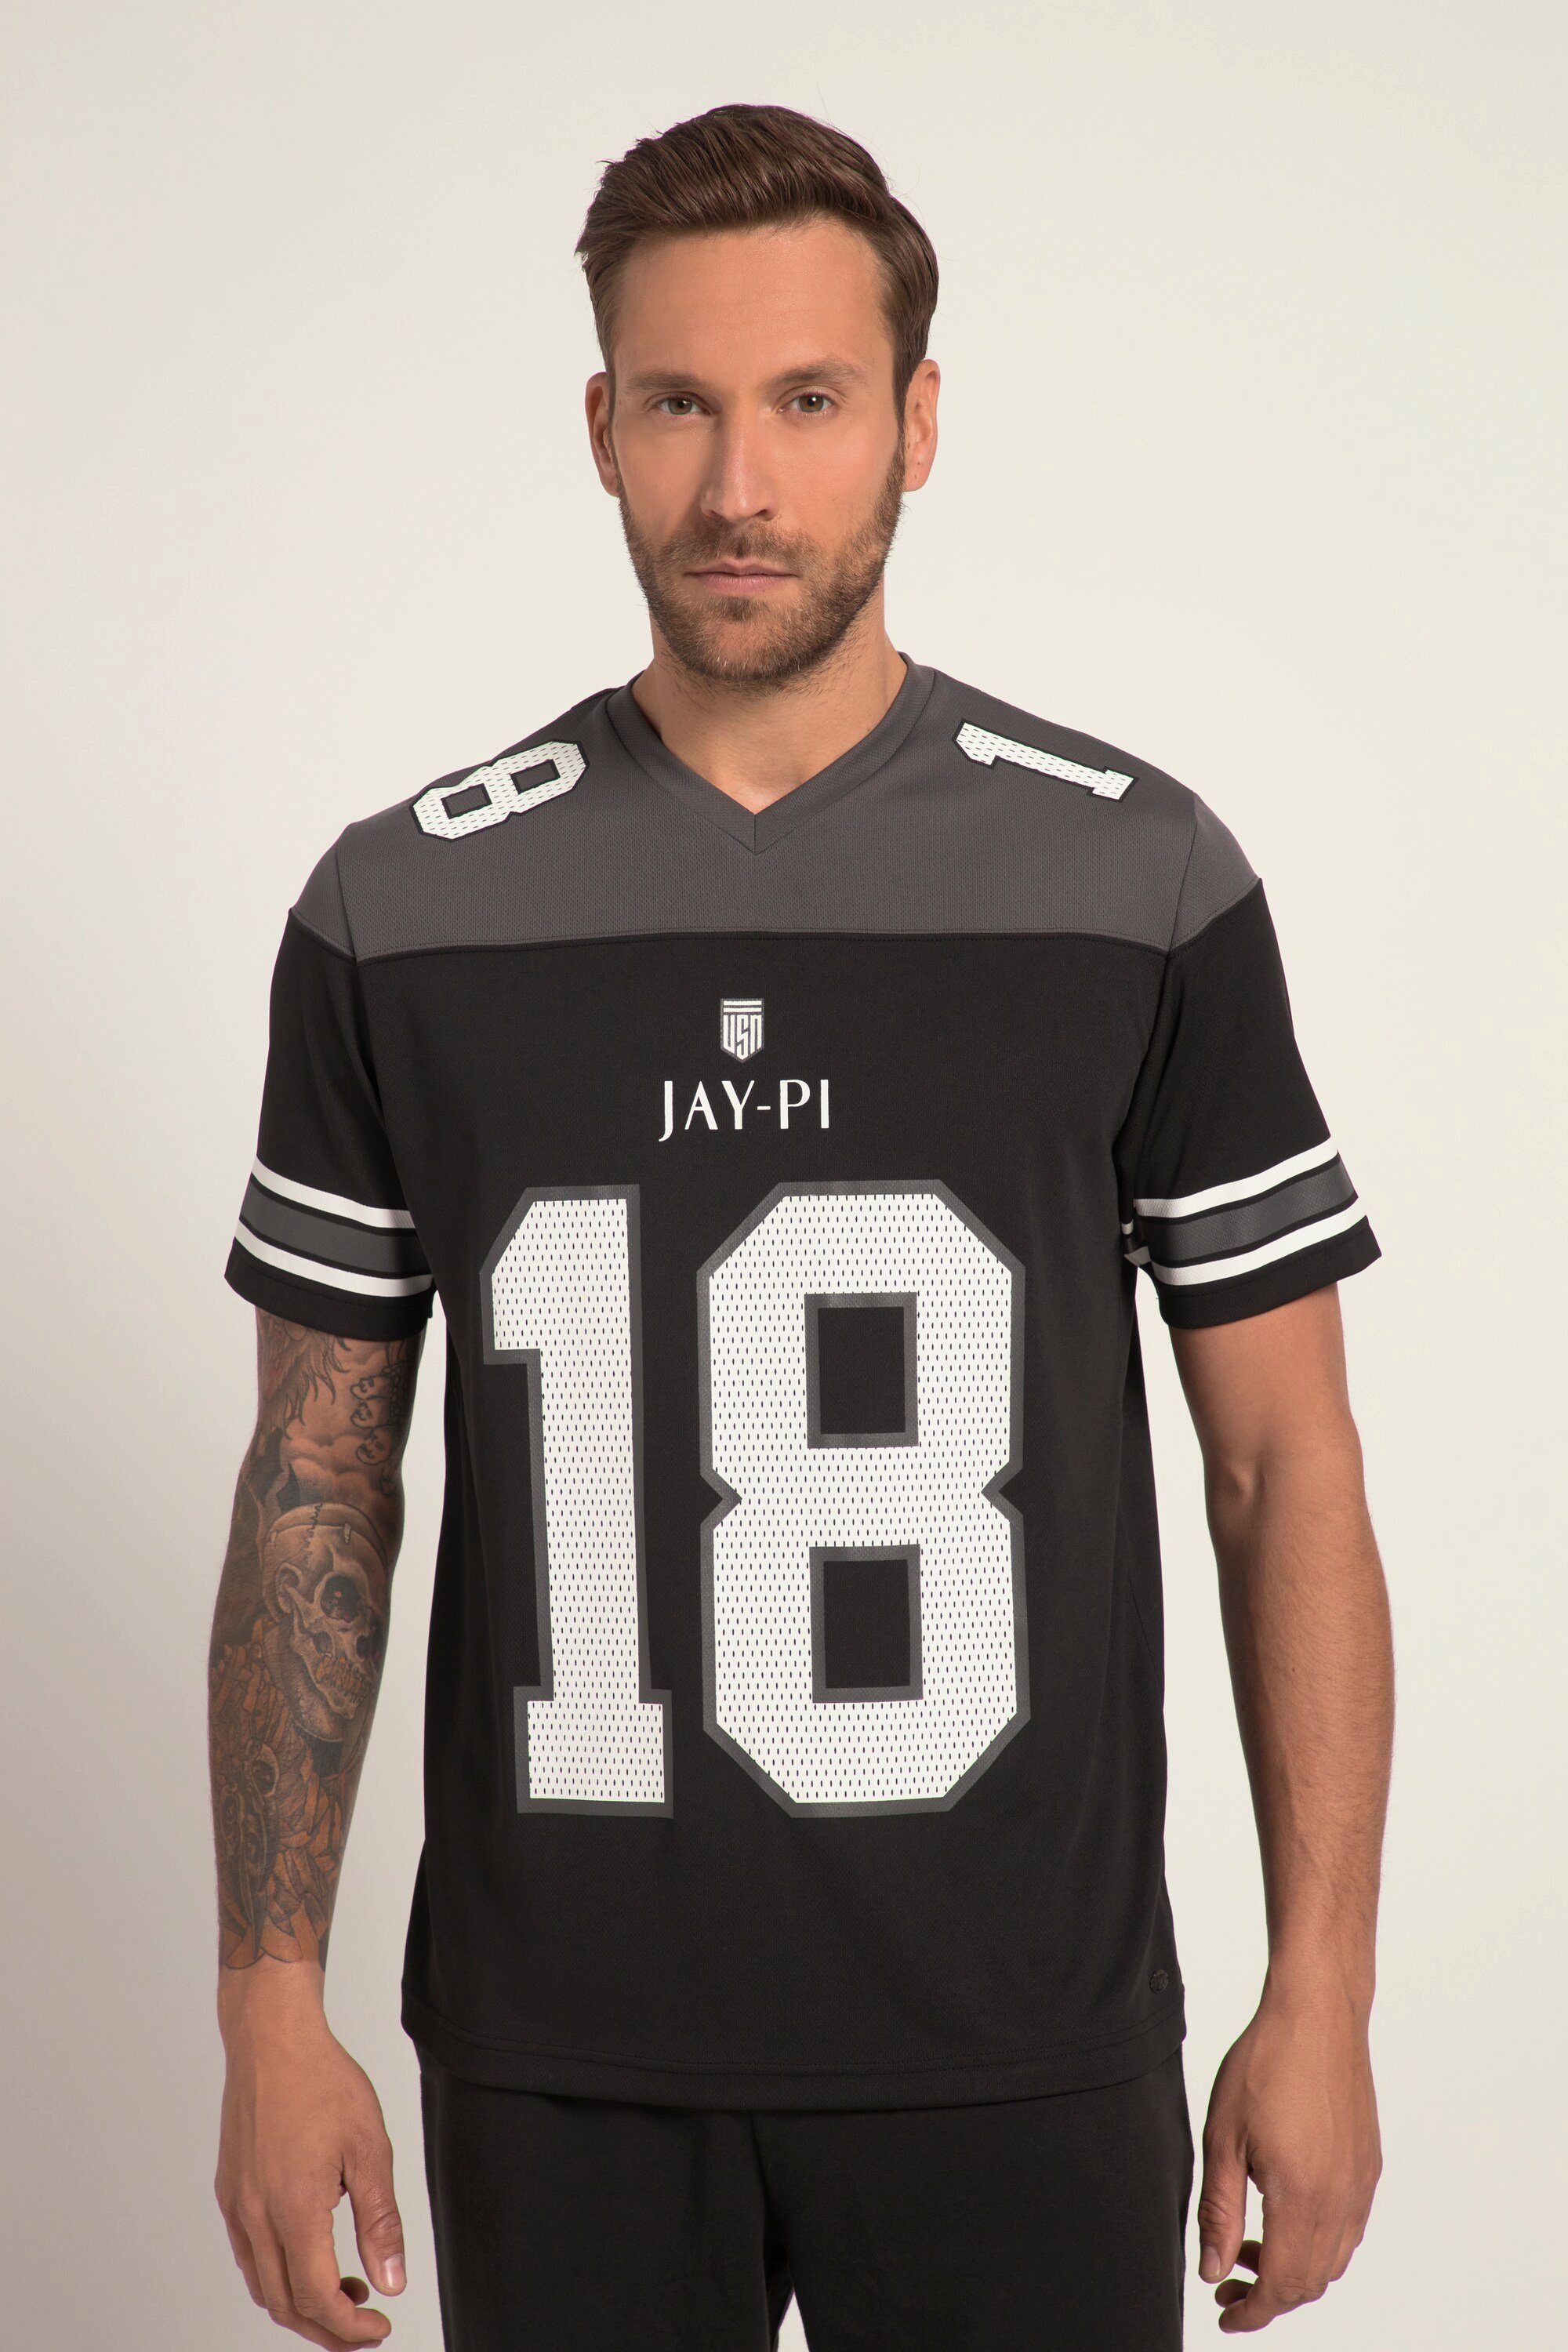 JP1880 T-Shirt Football-Trikot American Football Halbarm